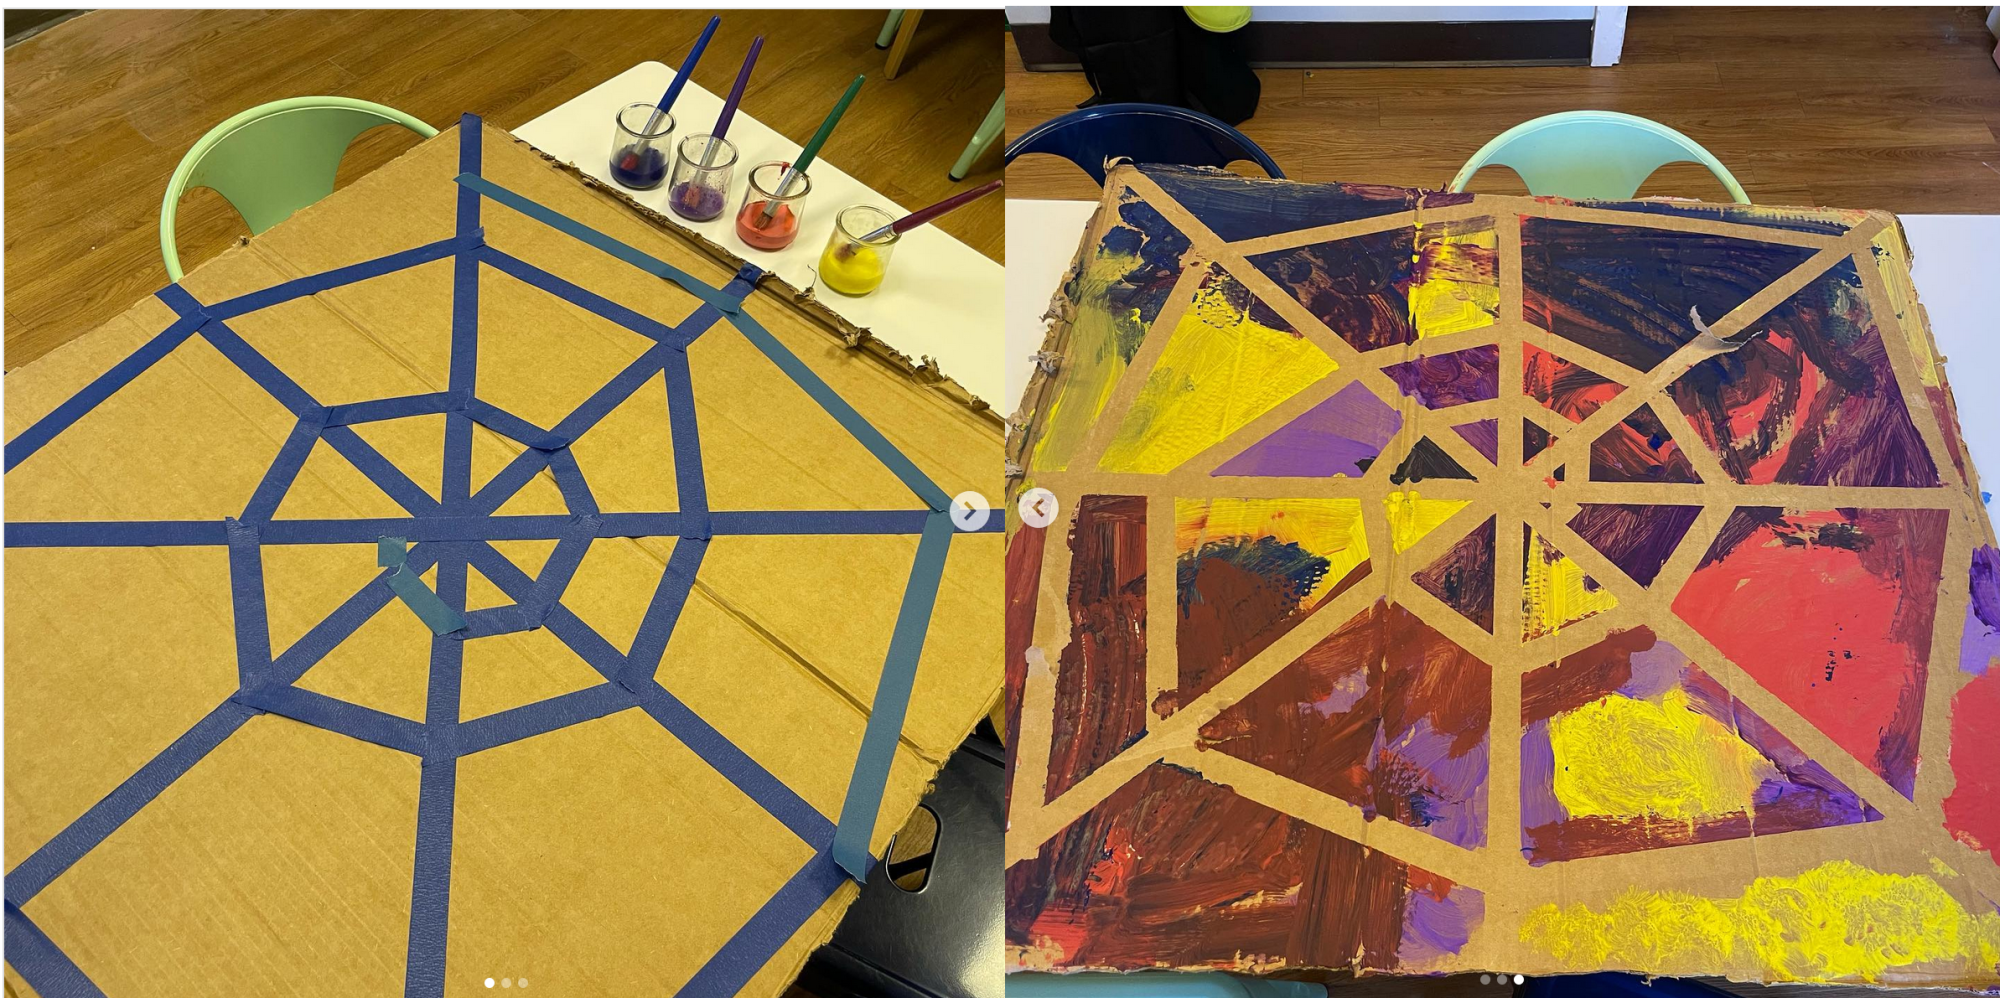 spider web art project for preschoolers